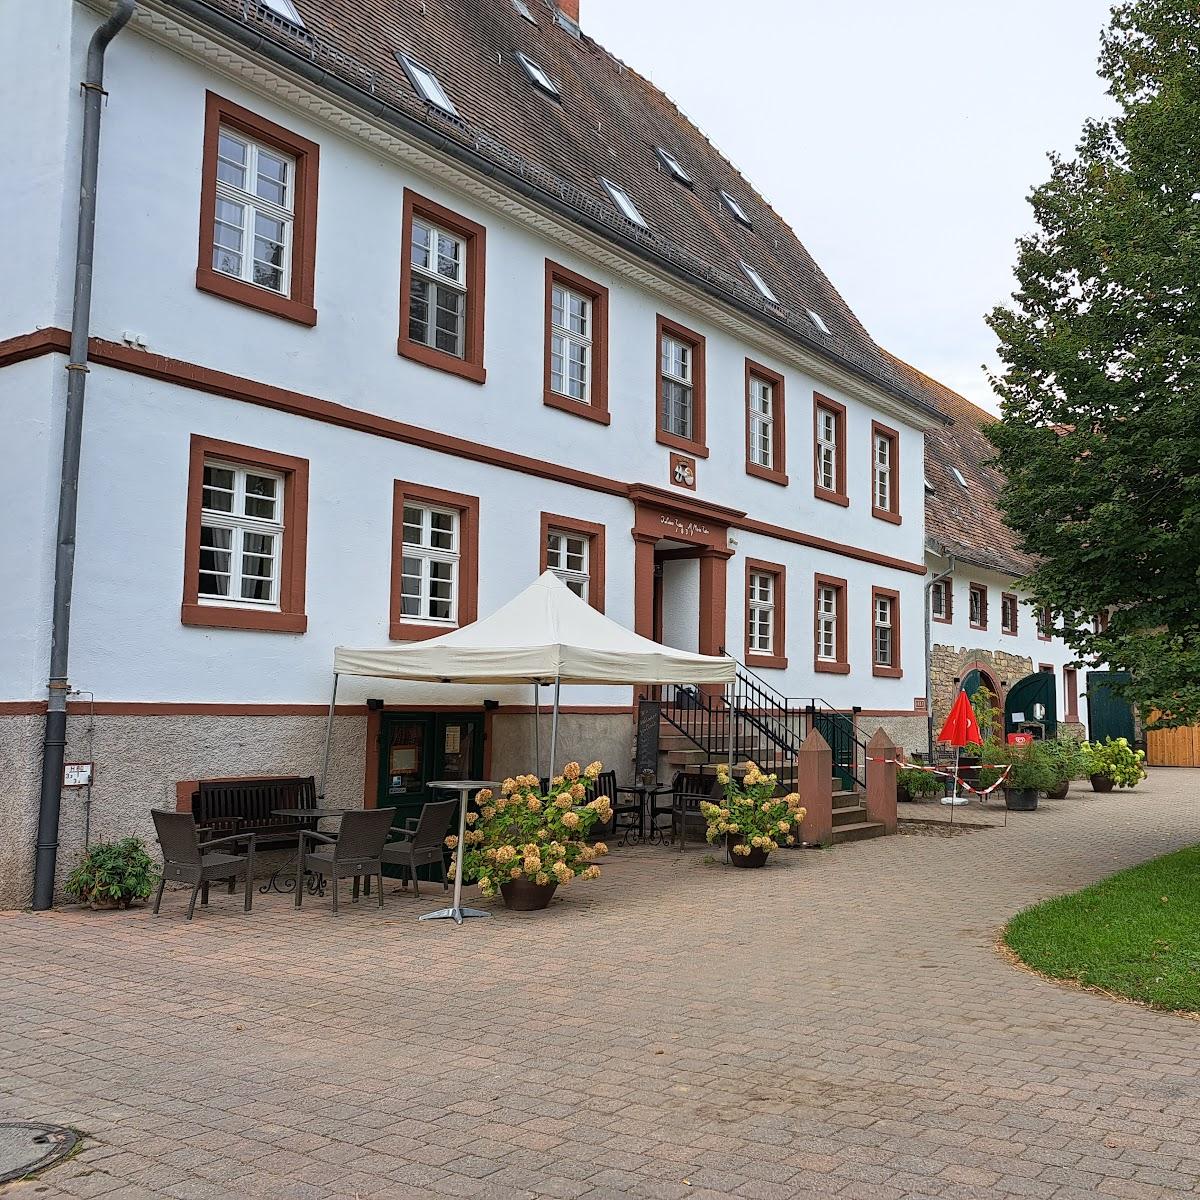 Restaurant "Ferme Auberge Wersauer Hof" in Reilingen